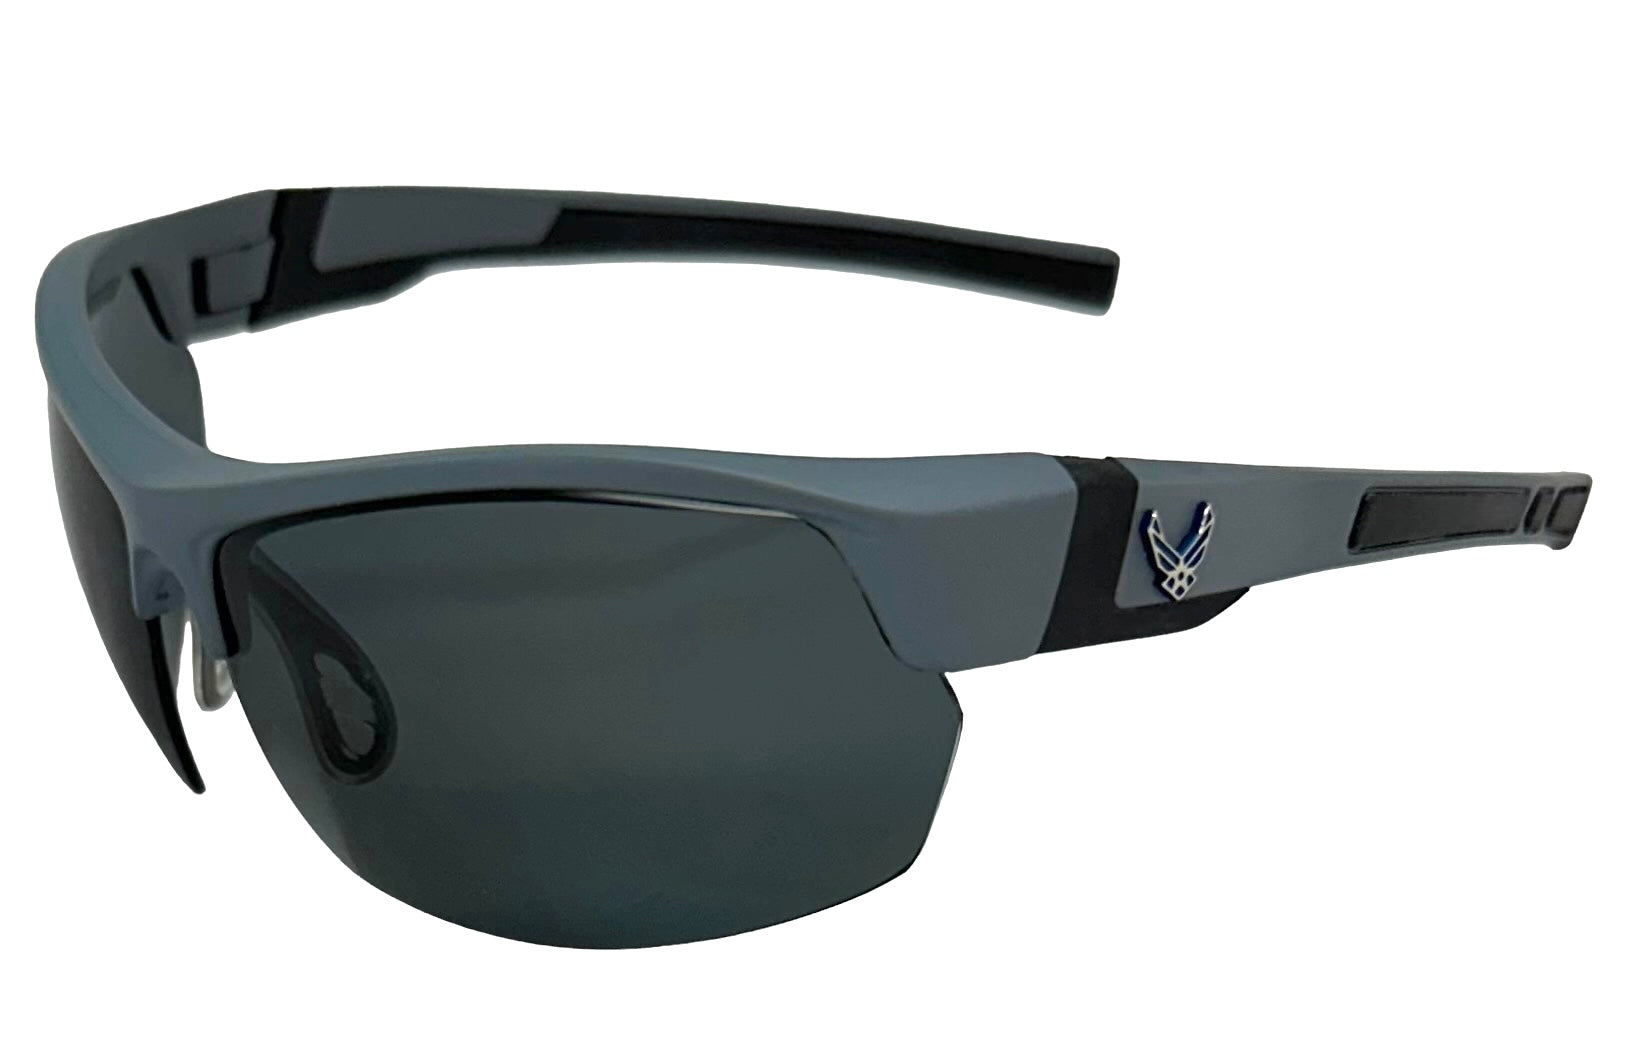 Polarized Sunglasses For Fishing From Solar Bat